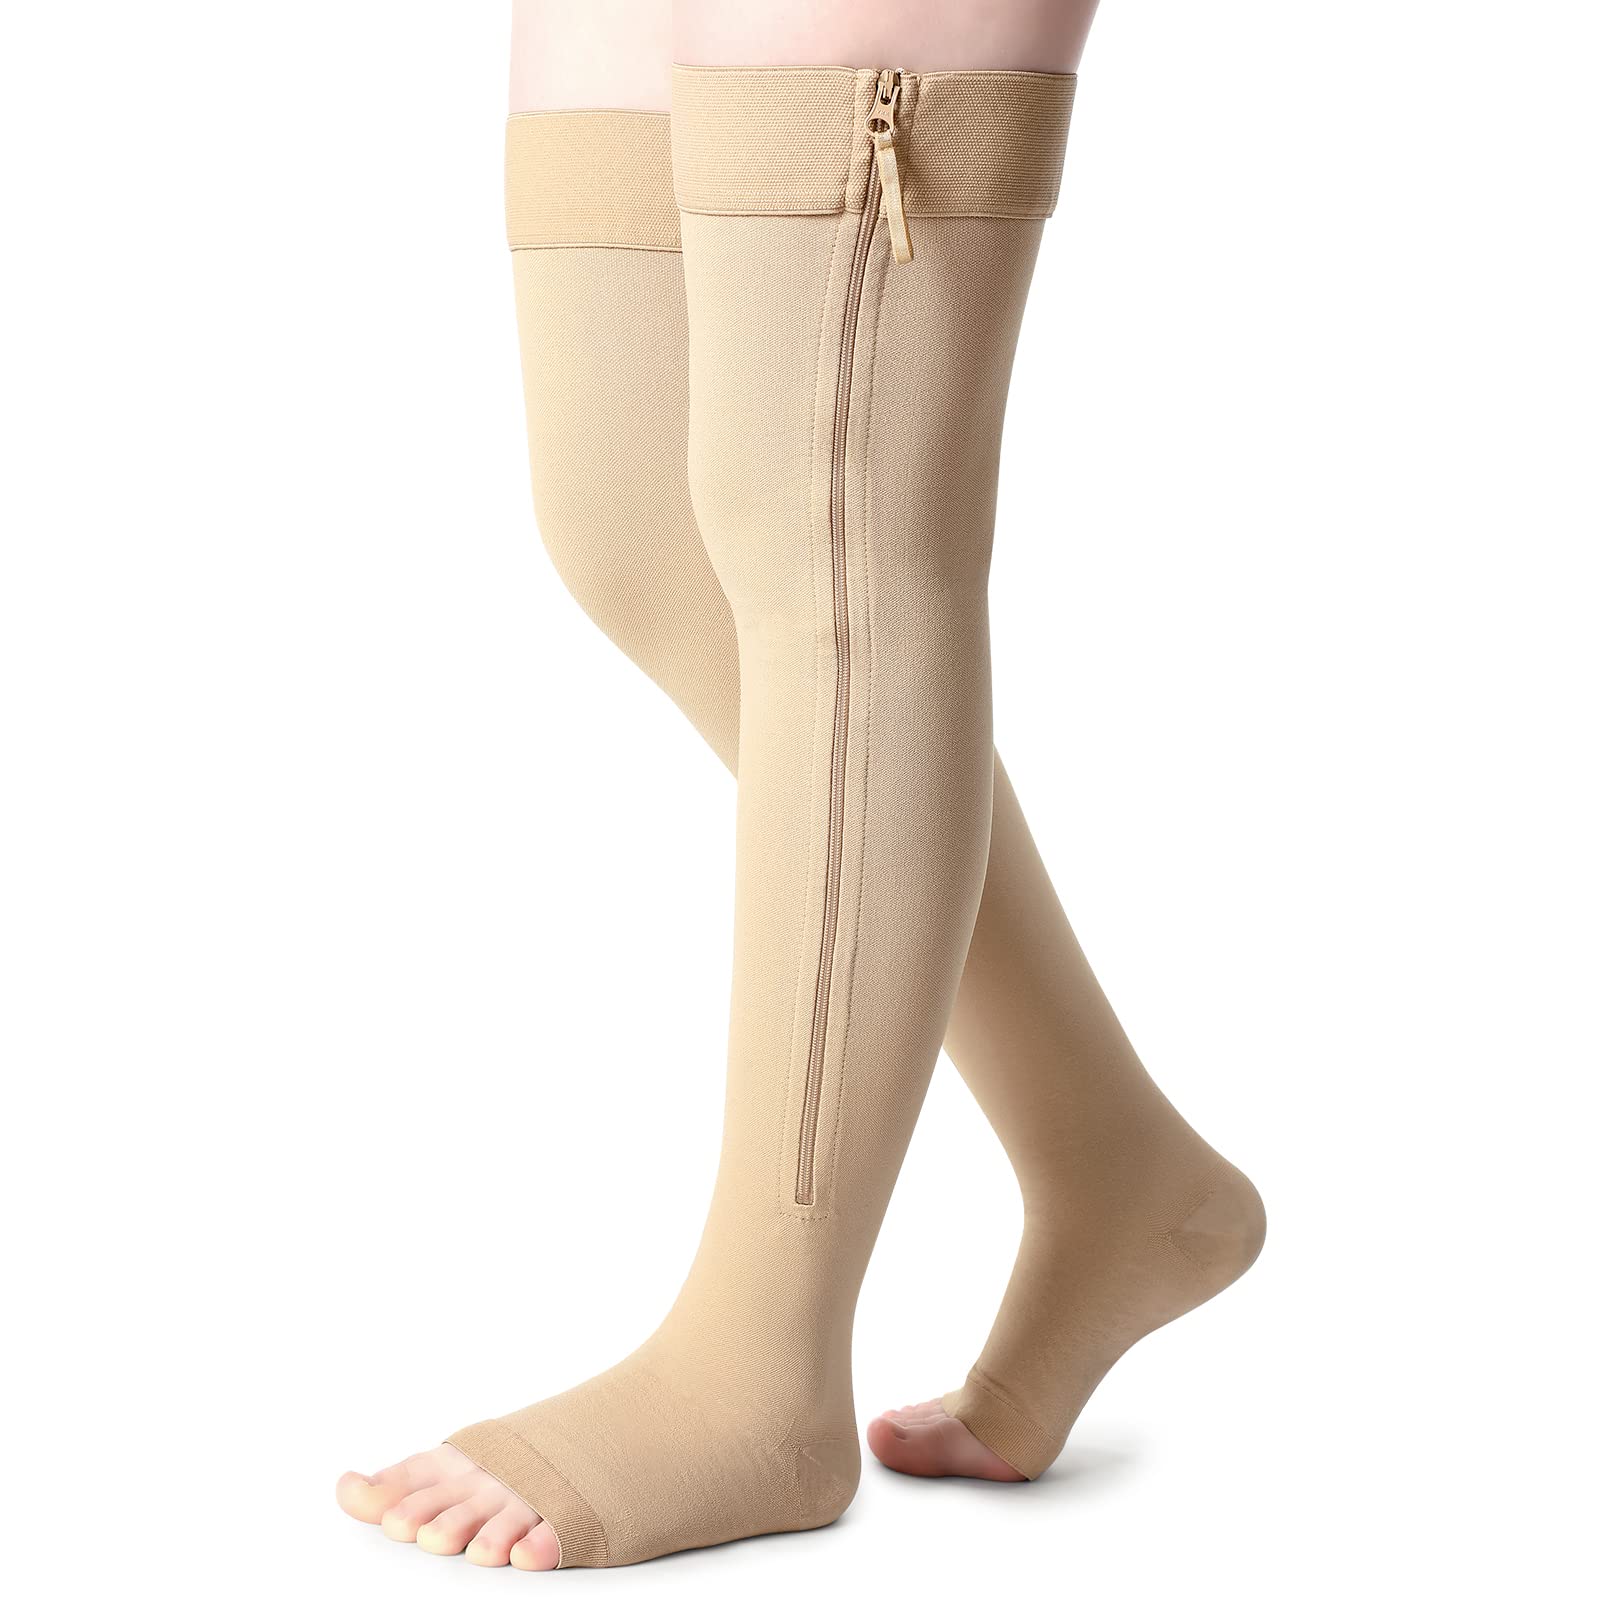 Newcotte Open Toe Zipper Compression Socks Thigh High 20-30mmhg